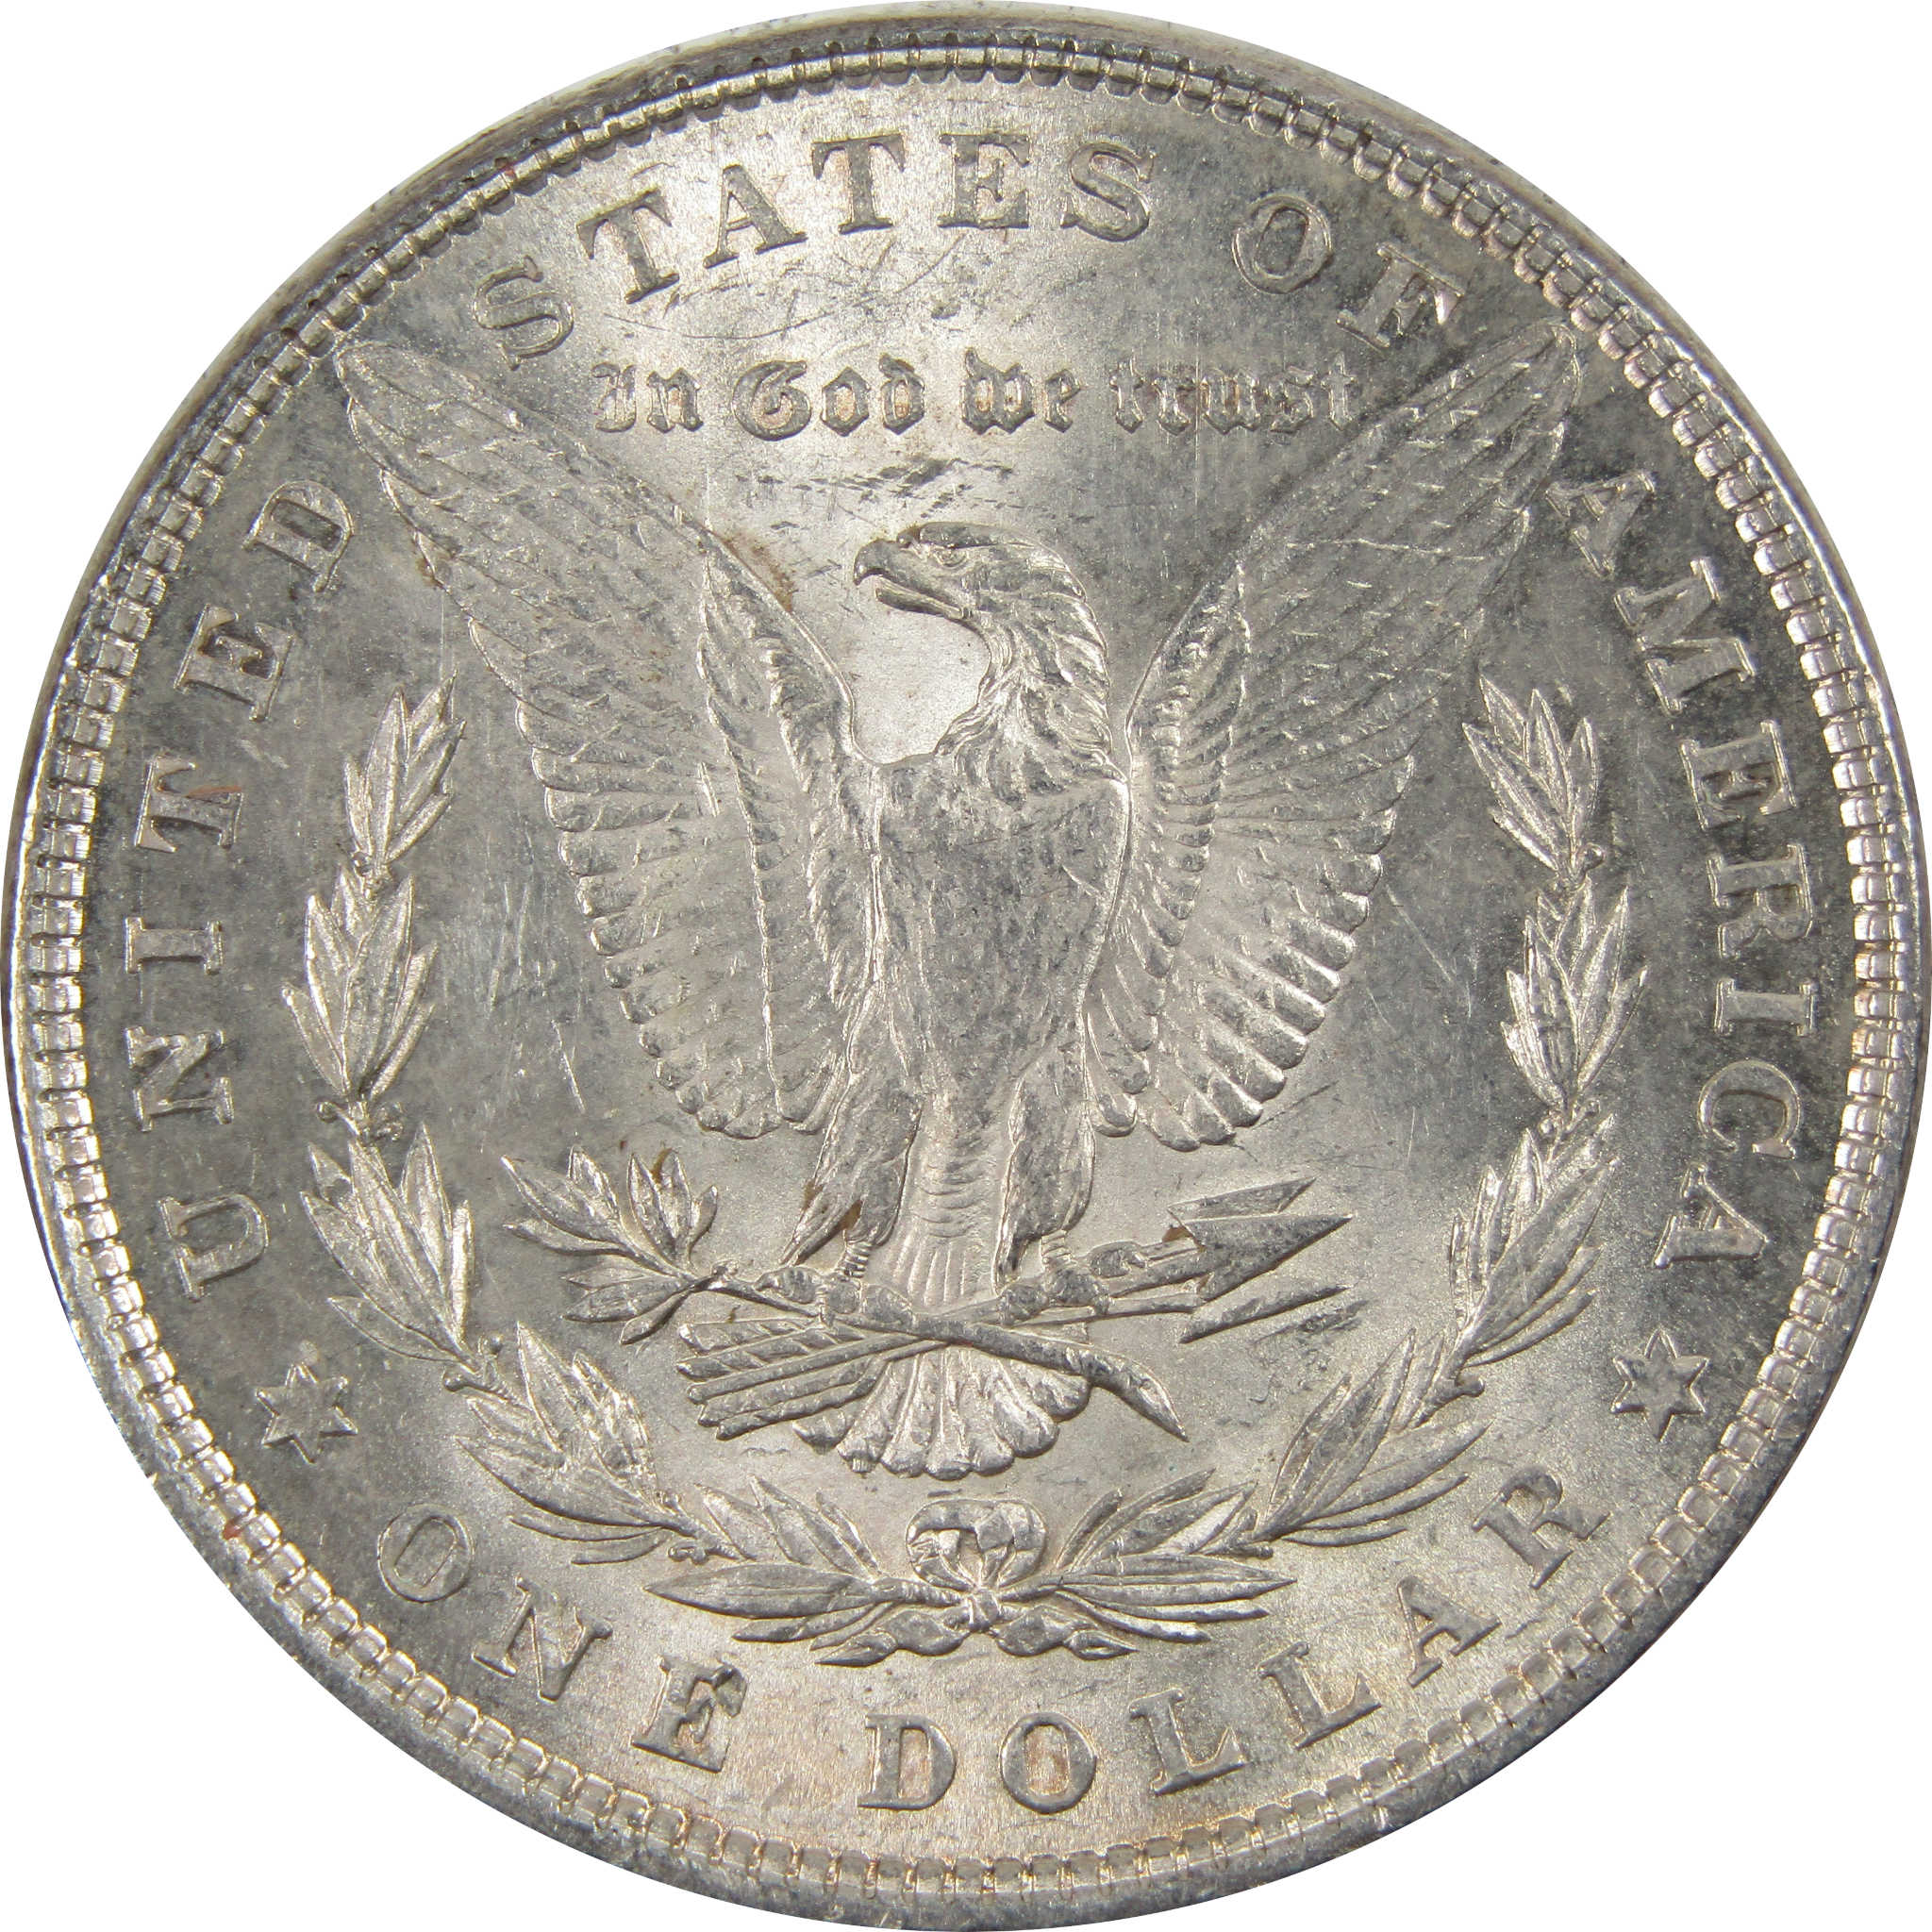 1878 7TF Rev 78 Morgan Dollar Borderline Unc 90% Silver SKU:I7854 - Morgan coin - Morgan silver dollar - Morgan silver dollar for sale - Profile Coins &amp; Collectibles